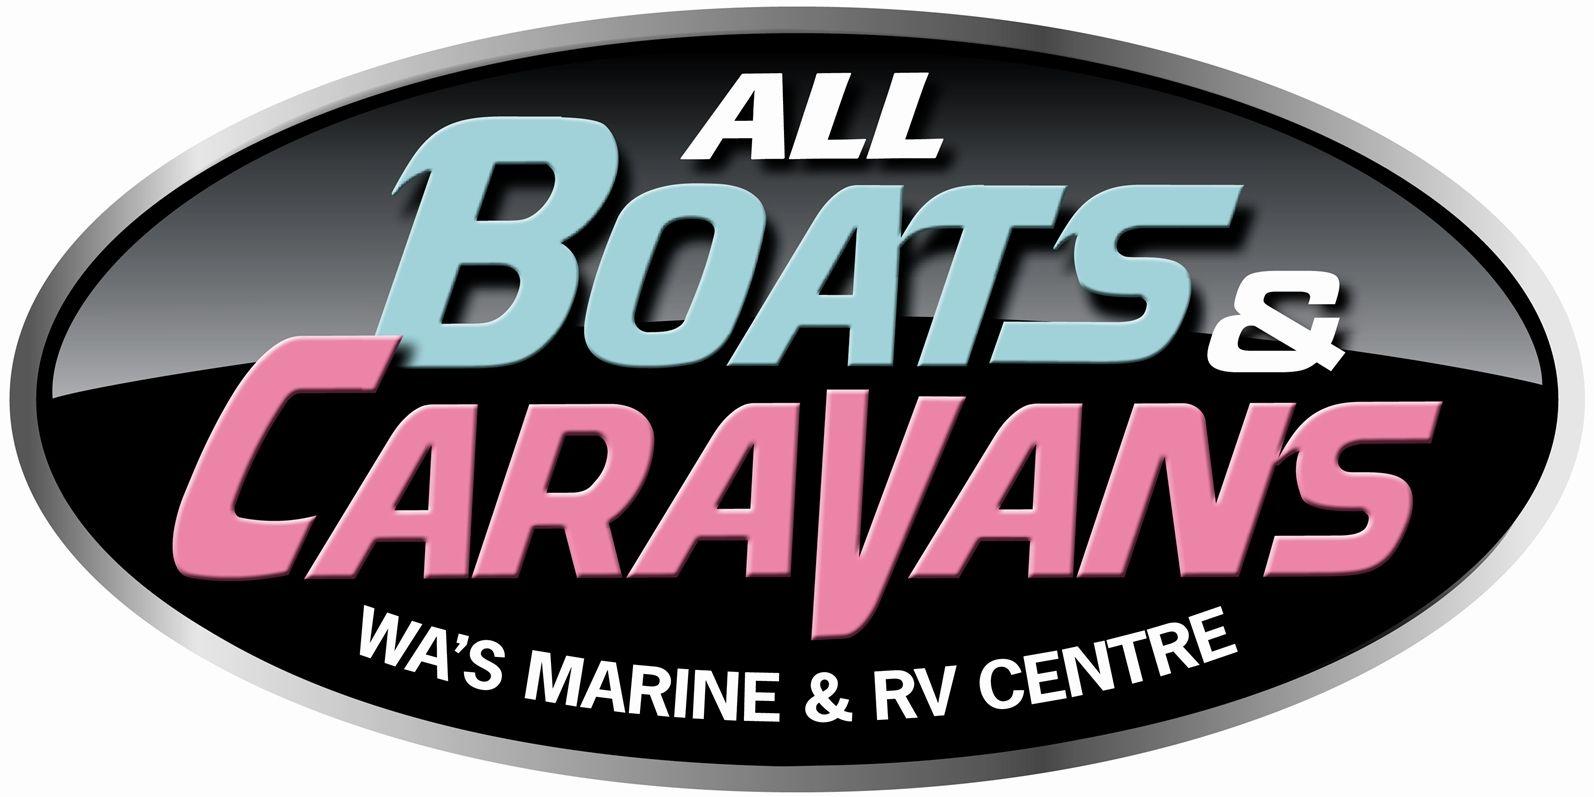 Jeep Tattoo Logo - All Boats & Caravans Logo 2. Tattoo Boats